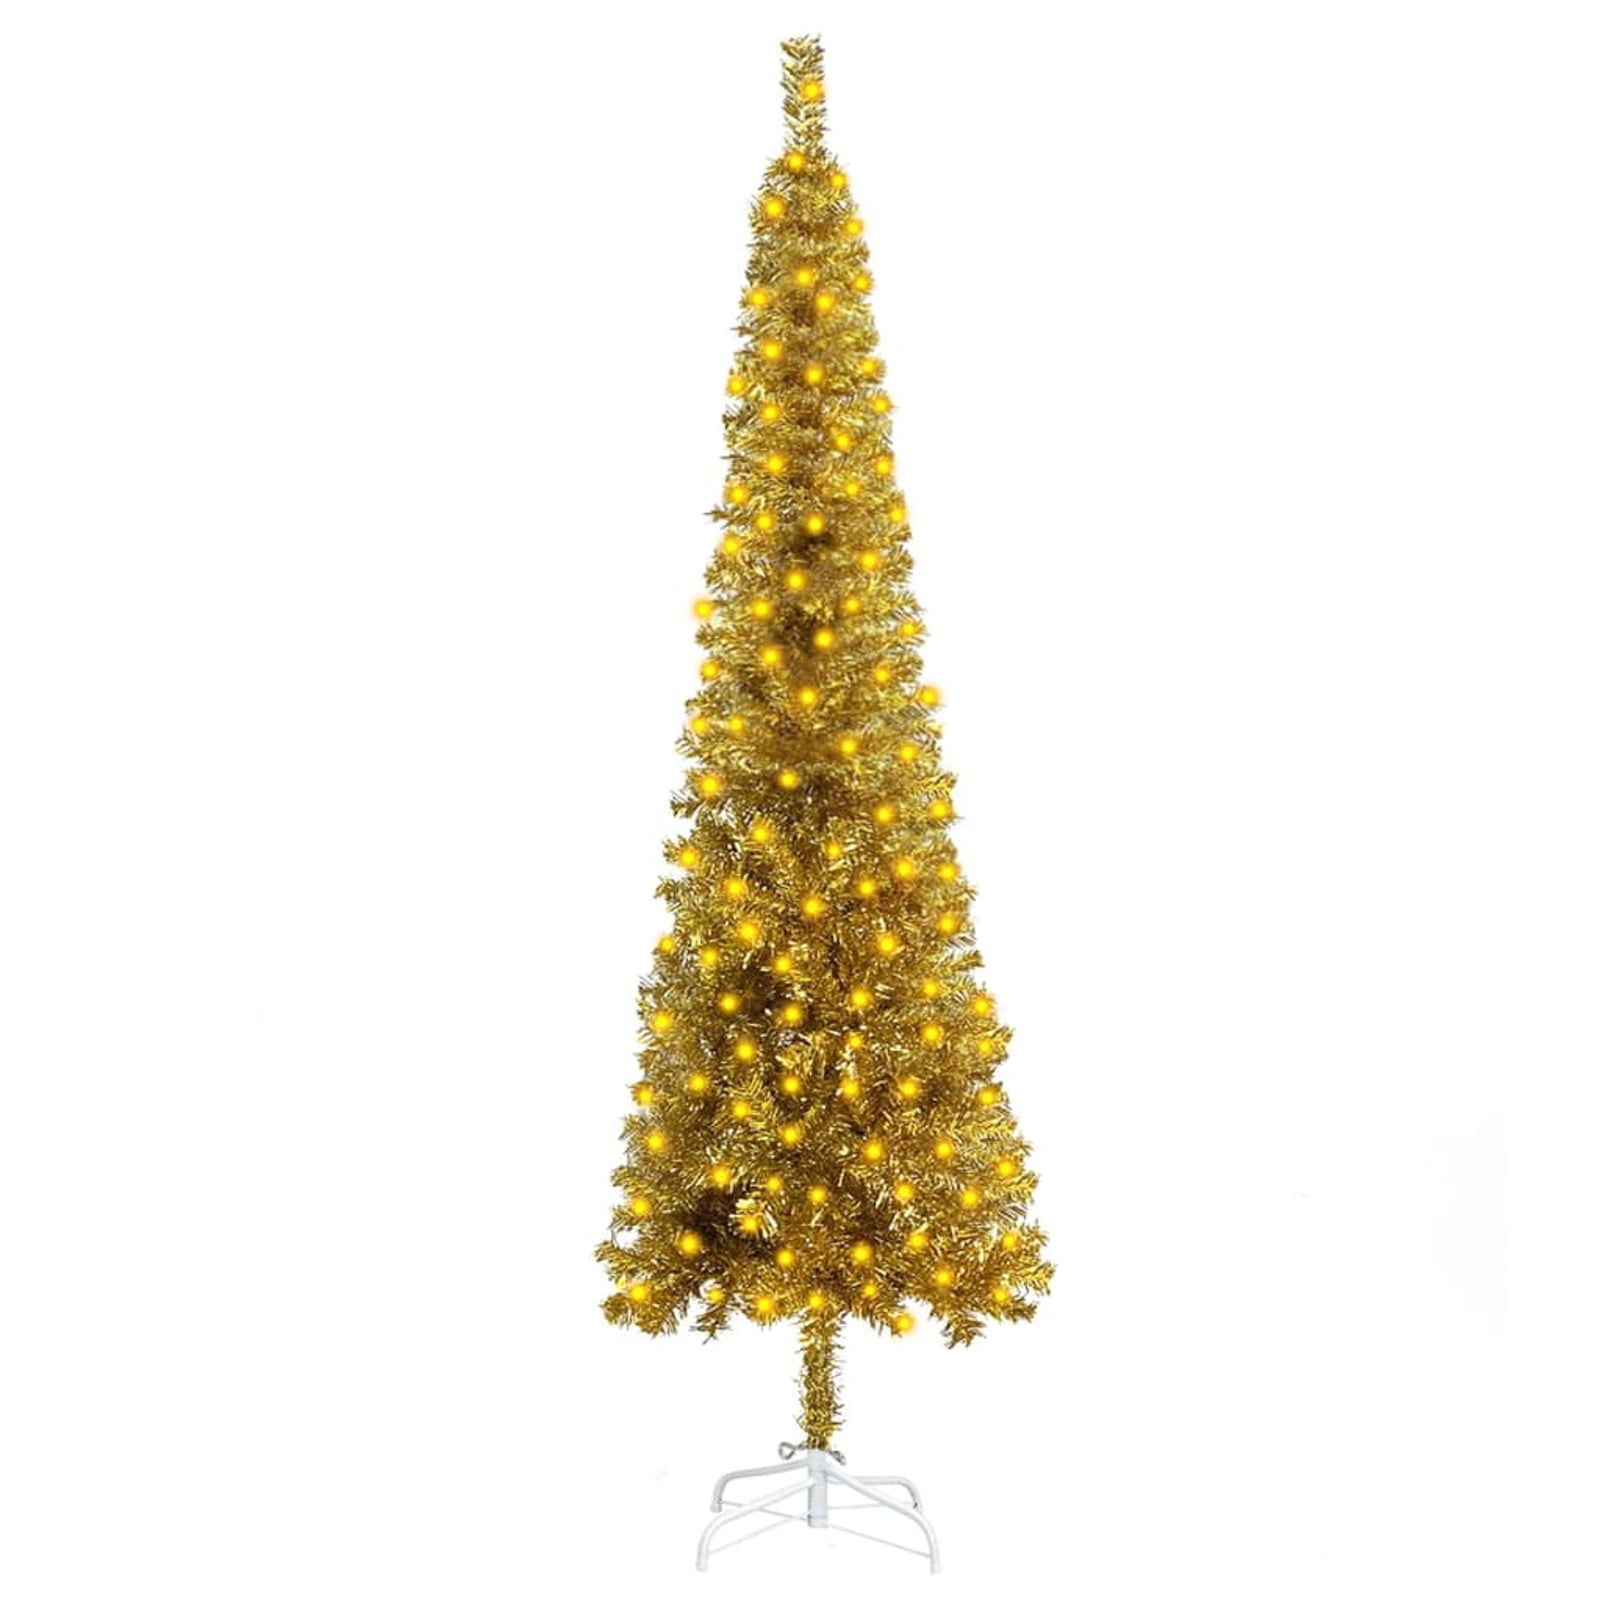 Details about   Christmas Tree Star Decor Gold Light Spots Waterproof Fabric Shower Curtain Set 